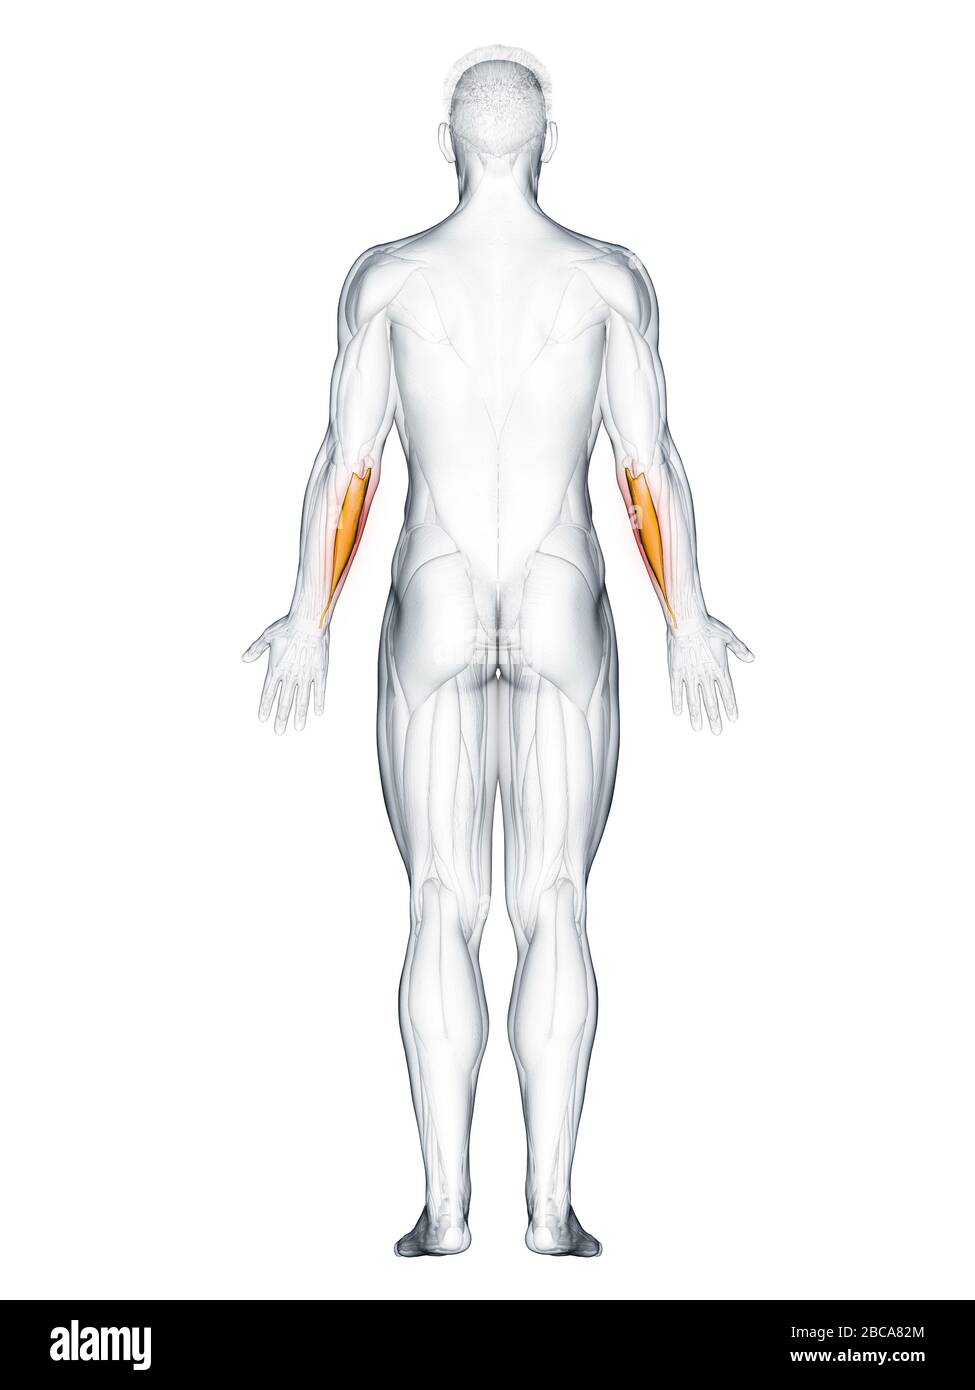 Flexor carpi ulnaris muscle, illustration. Stock Photo